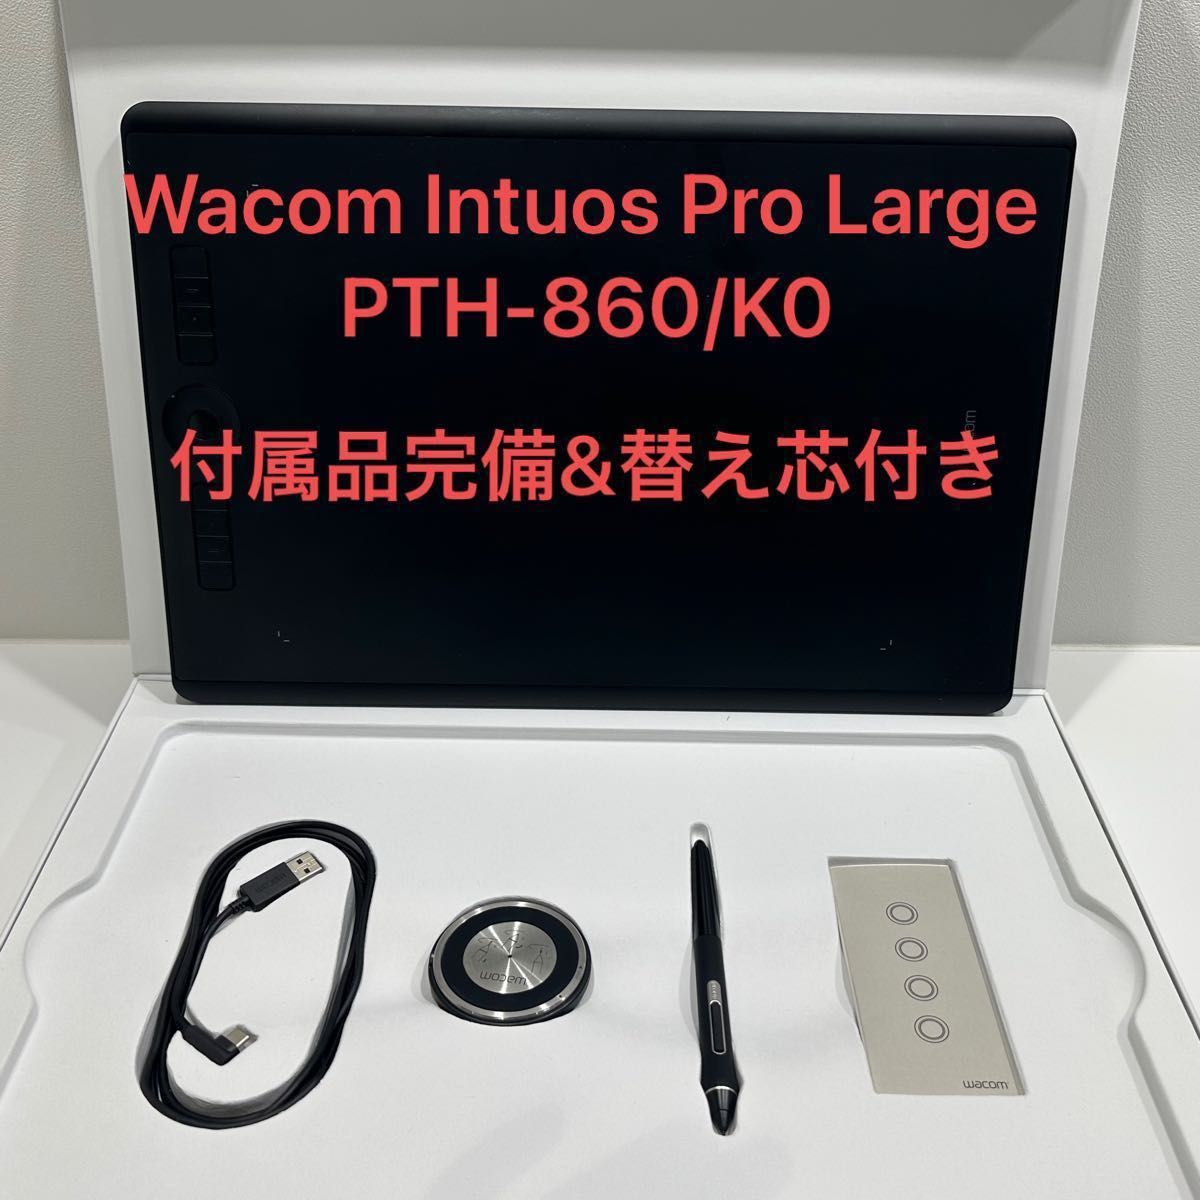 www.altawfer.com - Wacom Intuos Pro Large (PTH-860 K0) ワコム ペン